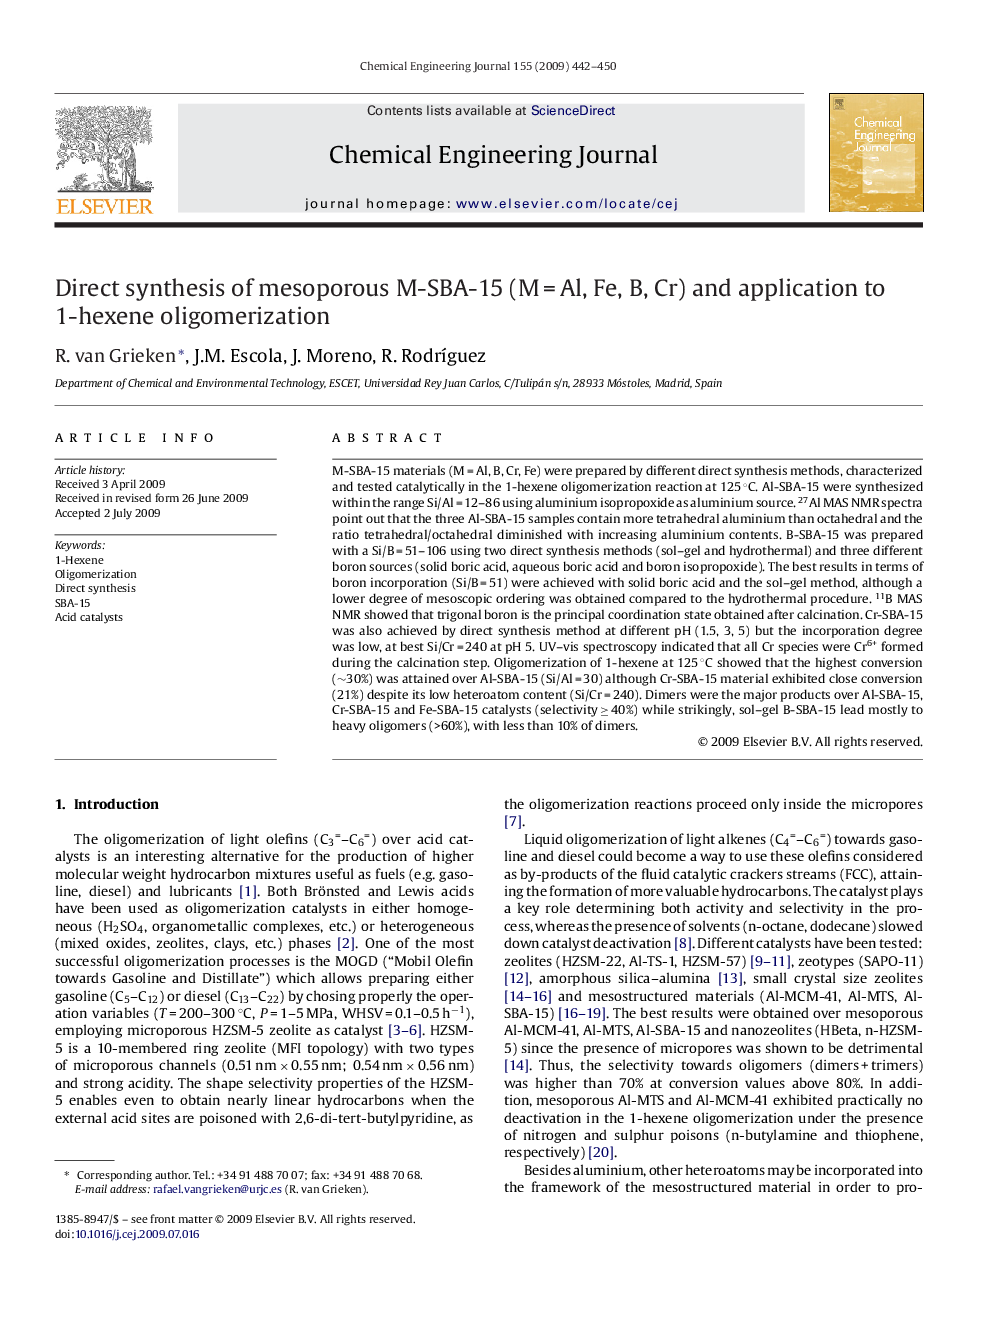 Direct synthesis of mesoporous M-SBA-15 (M = Al, Fe, B, Cr) and application to 1-hexene oligomerization